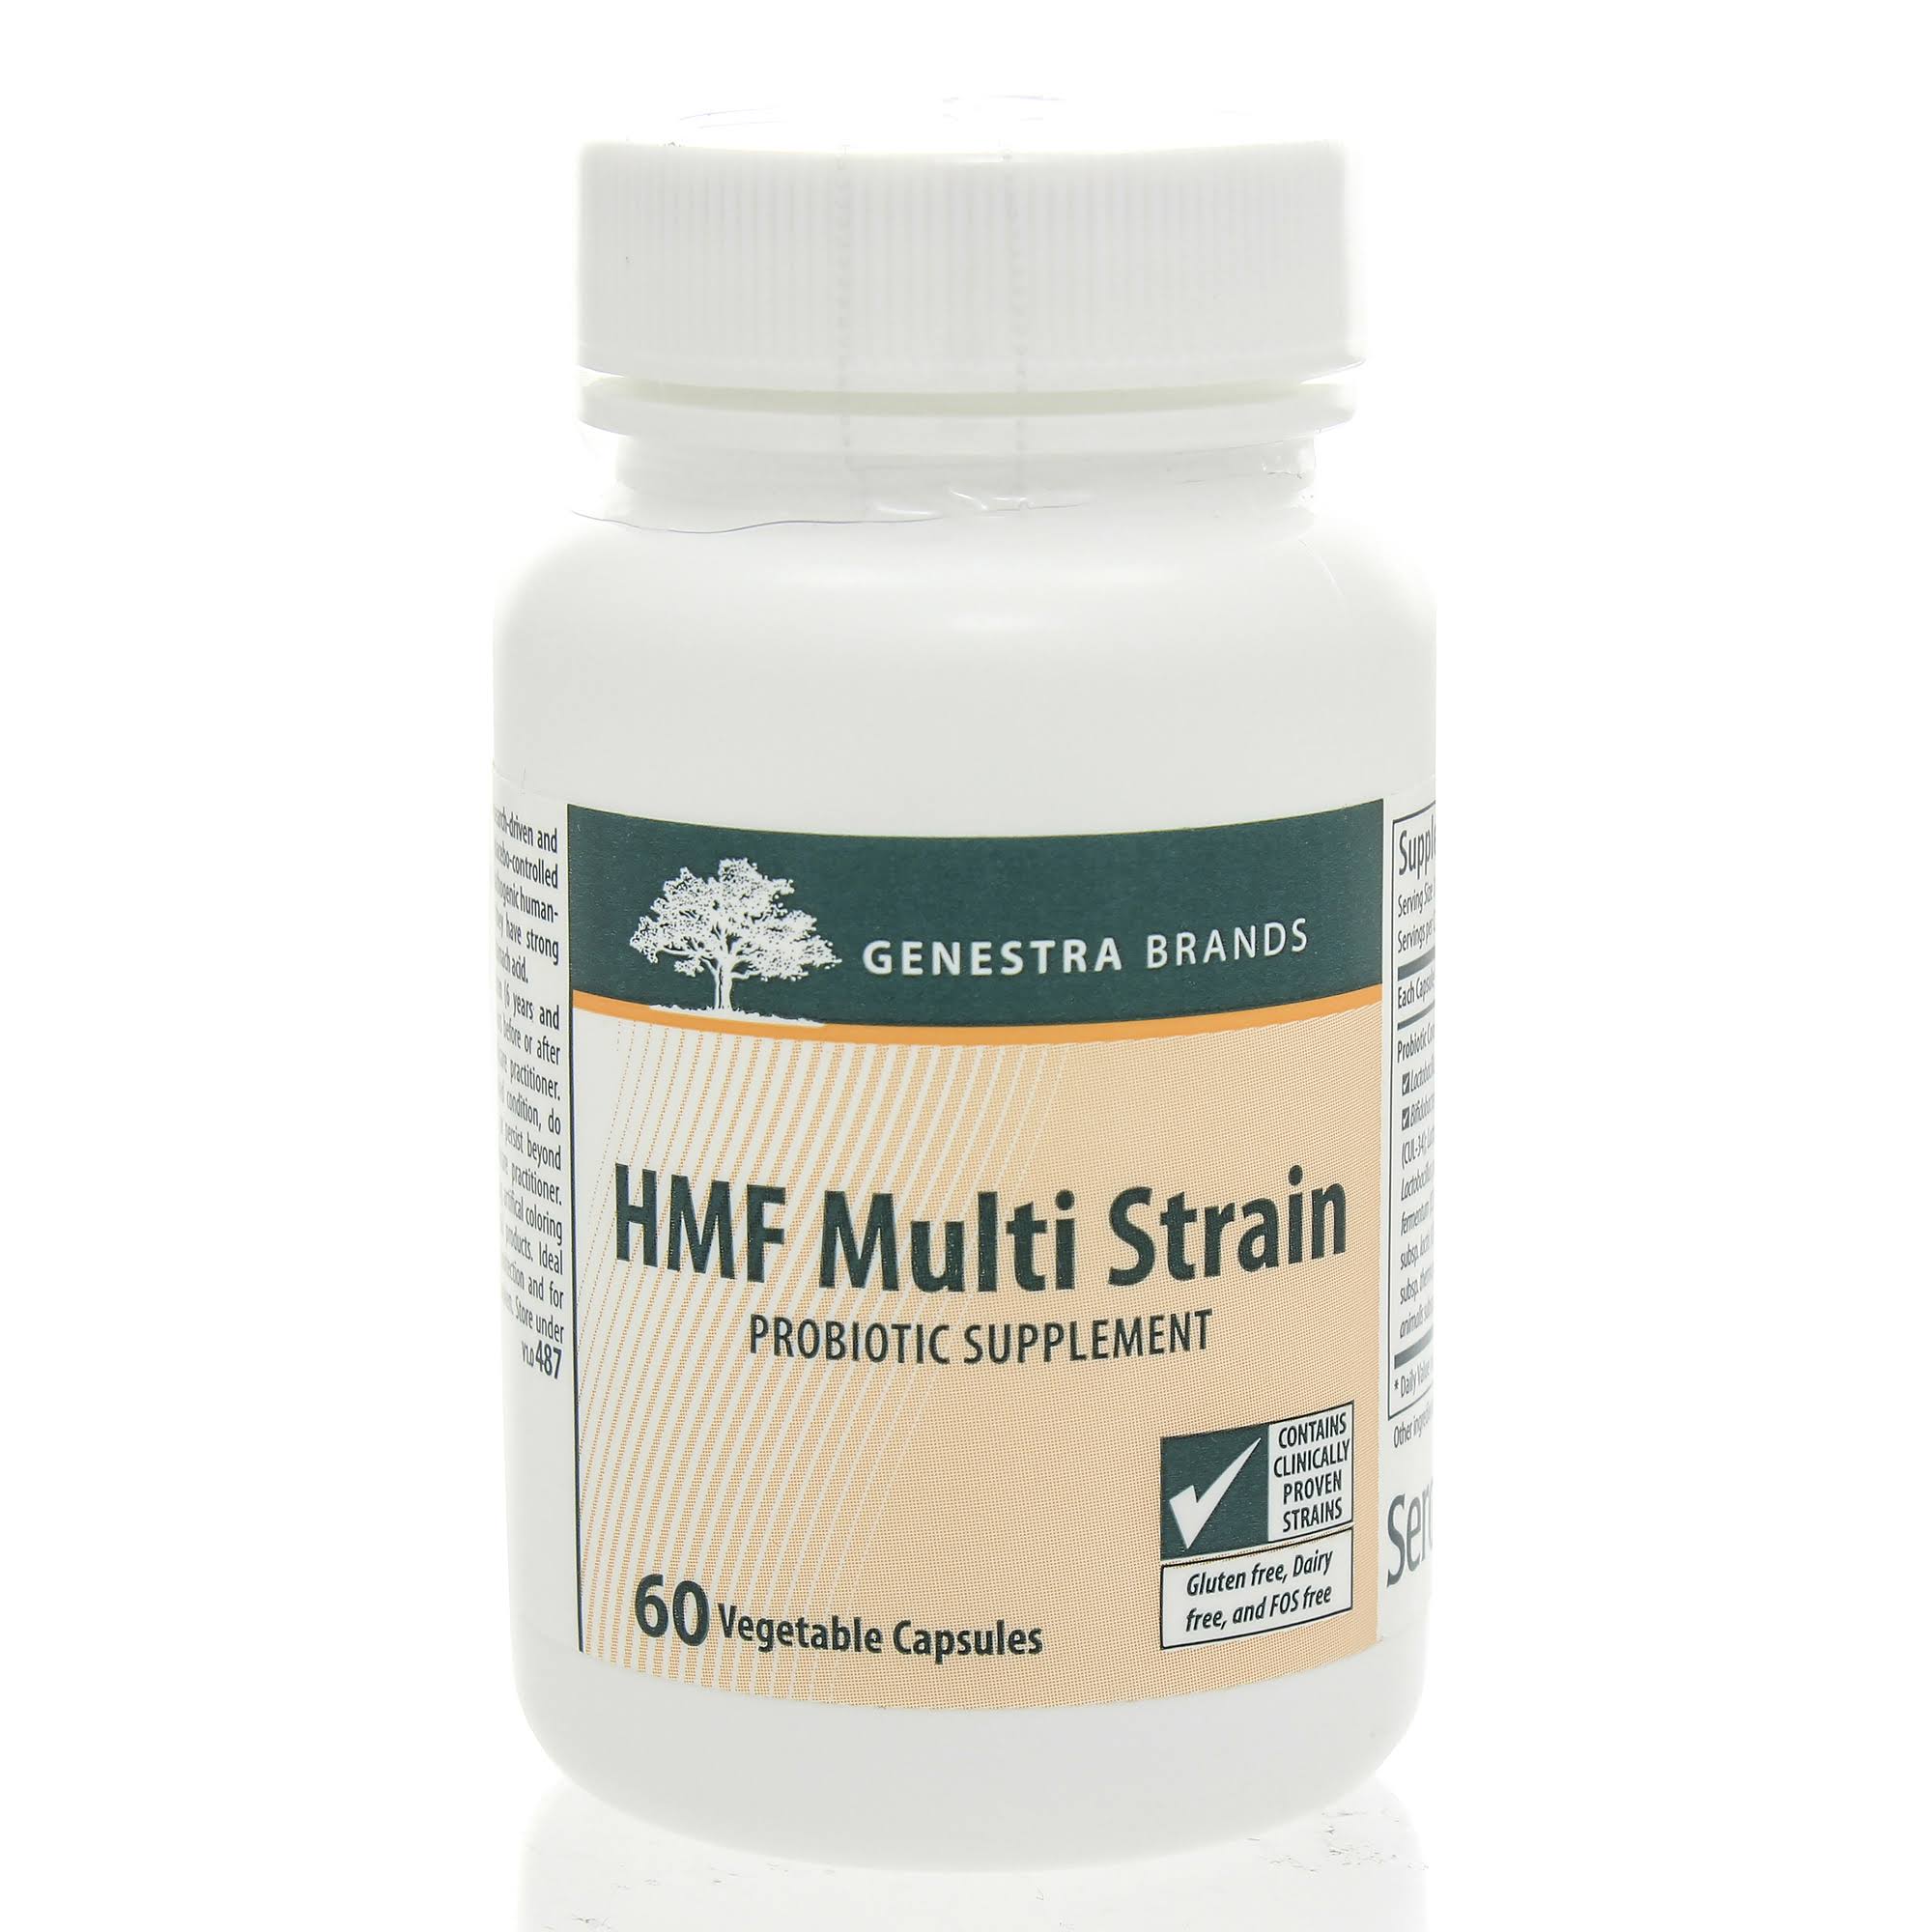 Genestra Brands HMF Multi Strain Probiotic Supplement - 60 Count